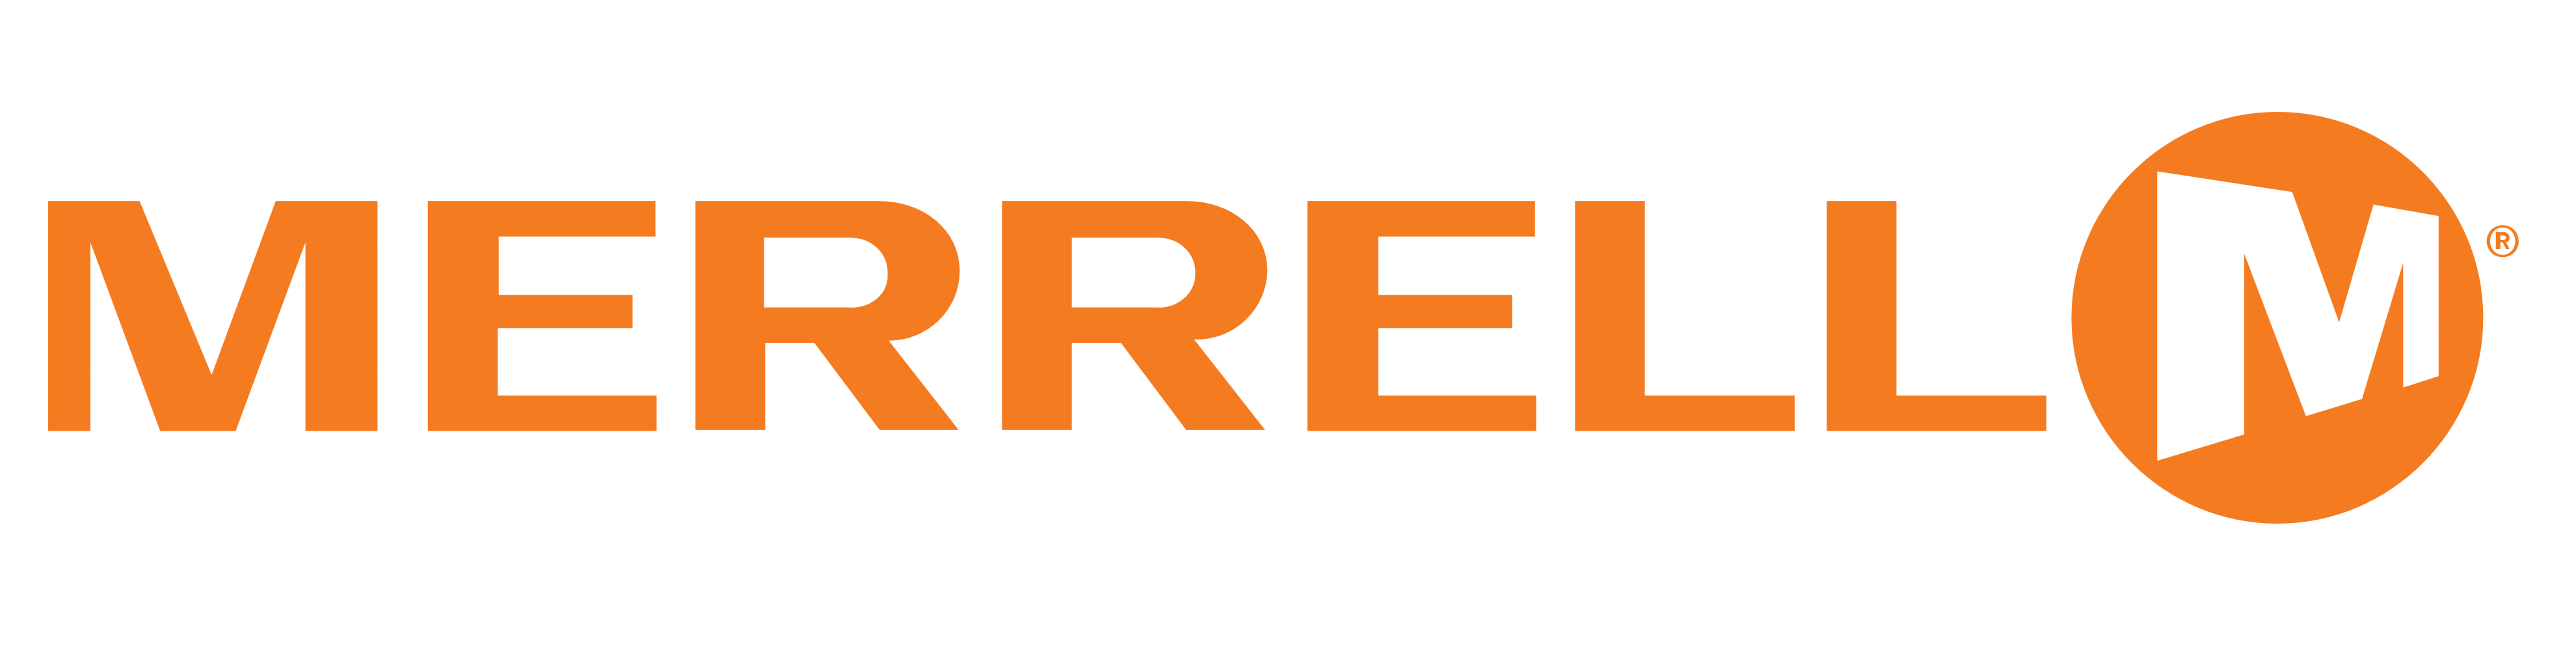 Merrell logo, logotype